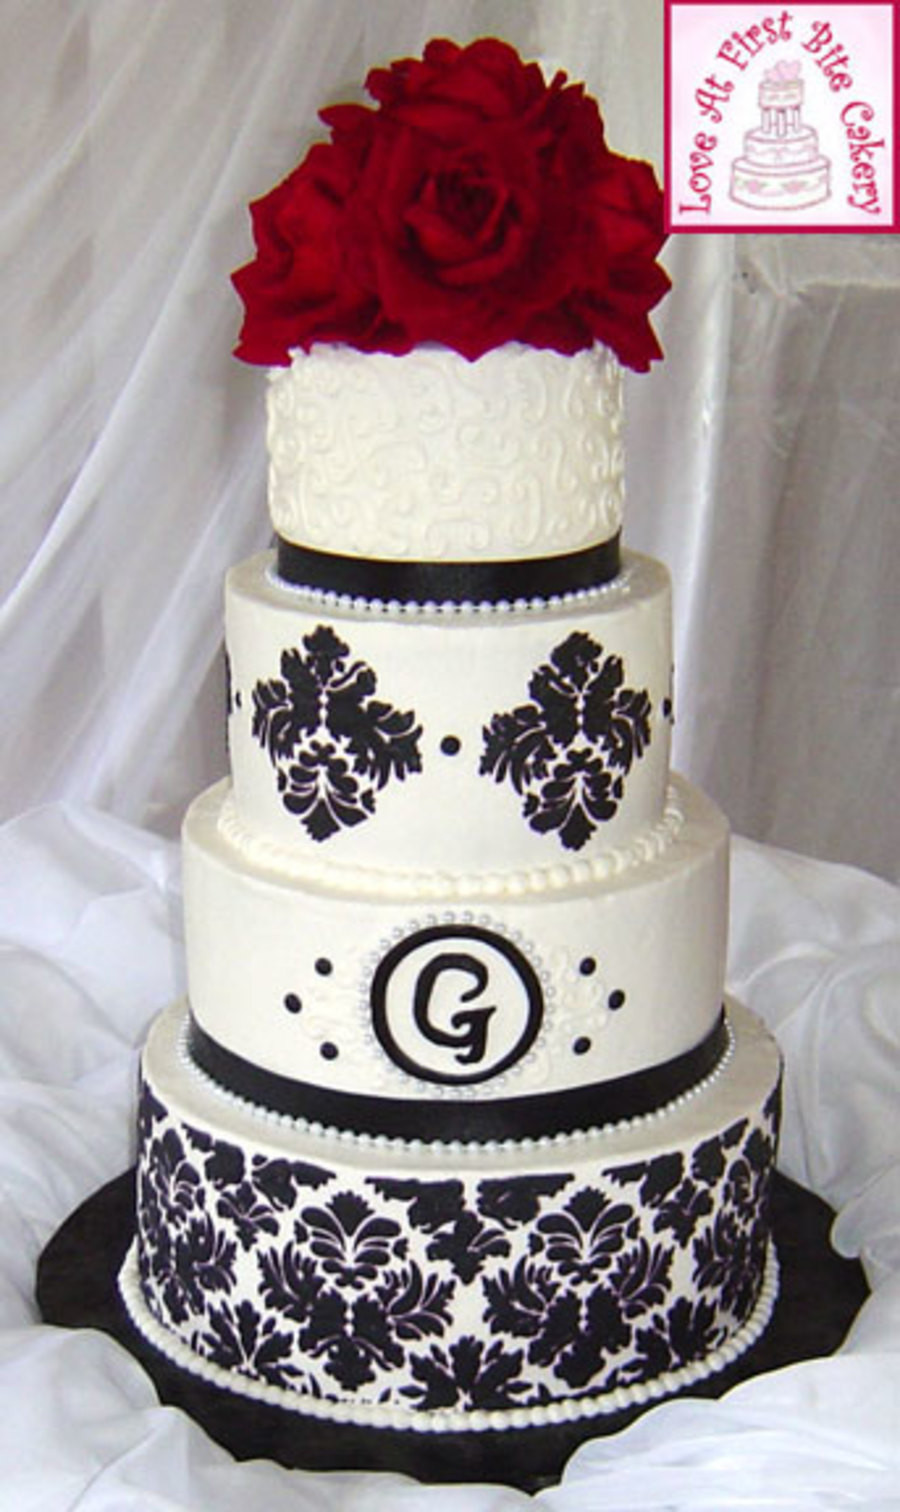 Red Black White Wedding Cake
 Stenciled Black White Red Wedding Cake CakeCentral